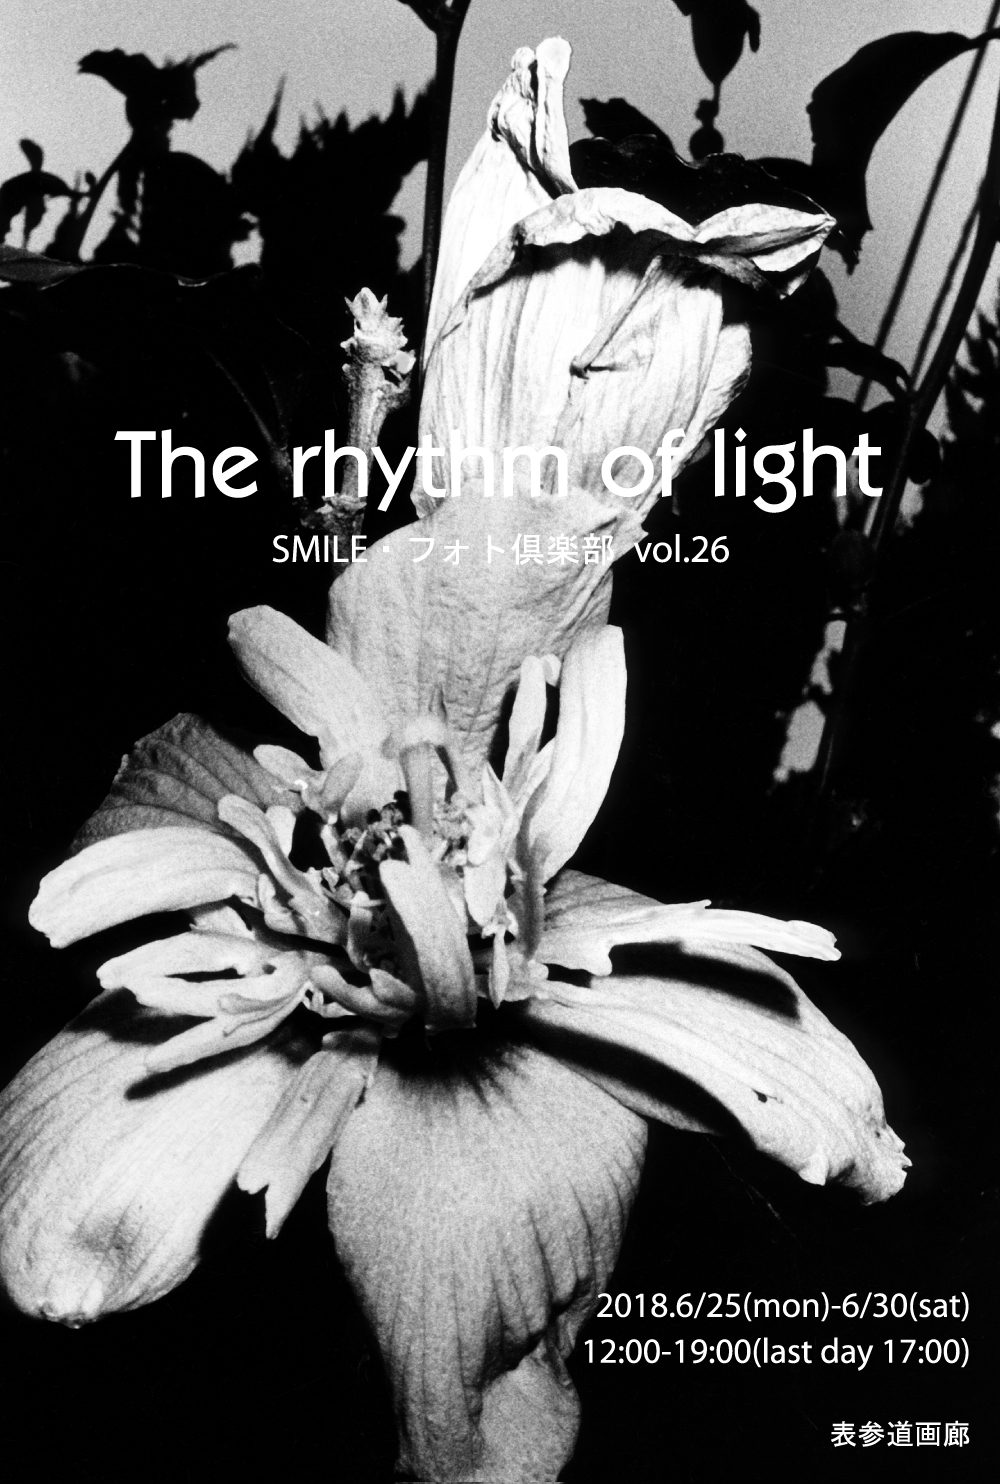 SMILE・フォト倶楽部 vol.26 / The rhythm of light